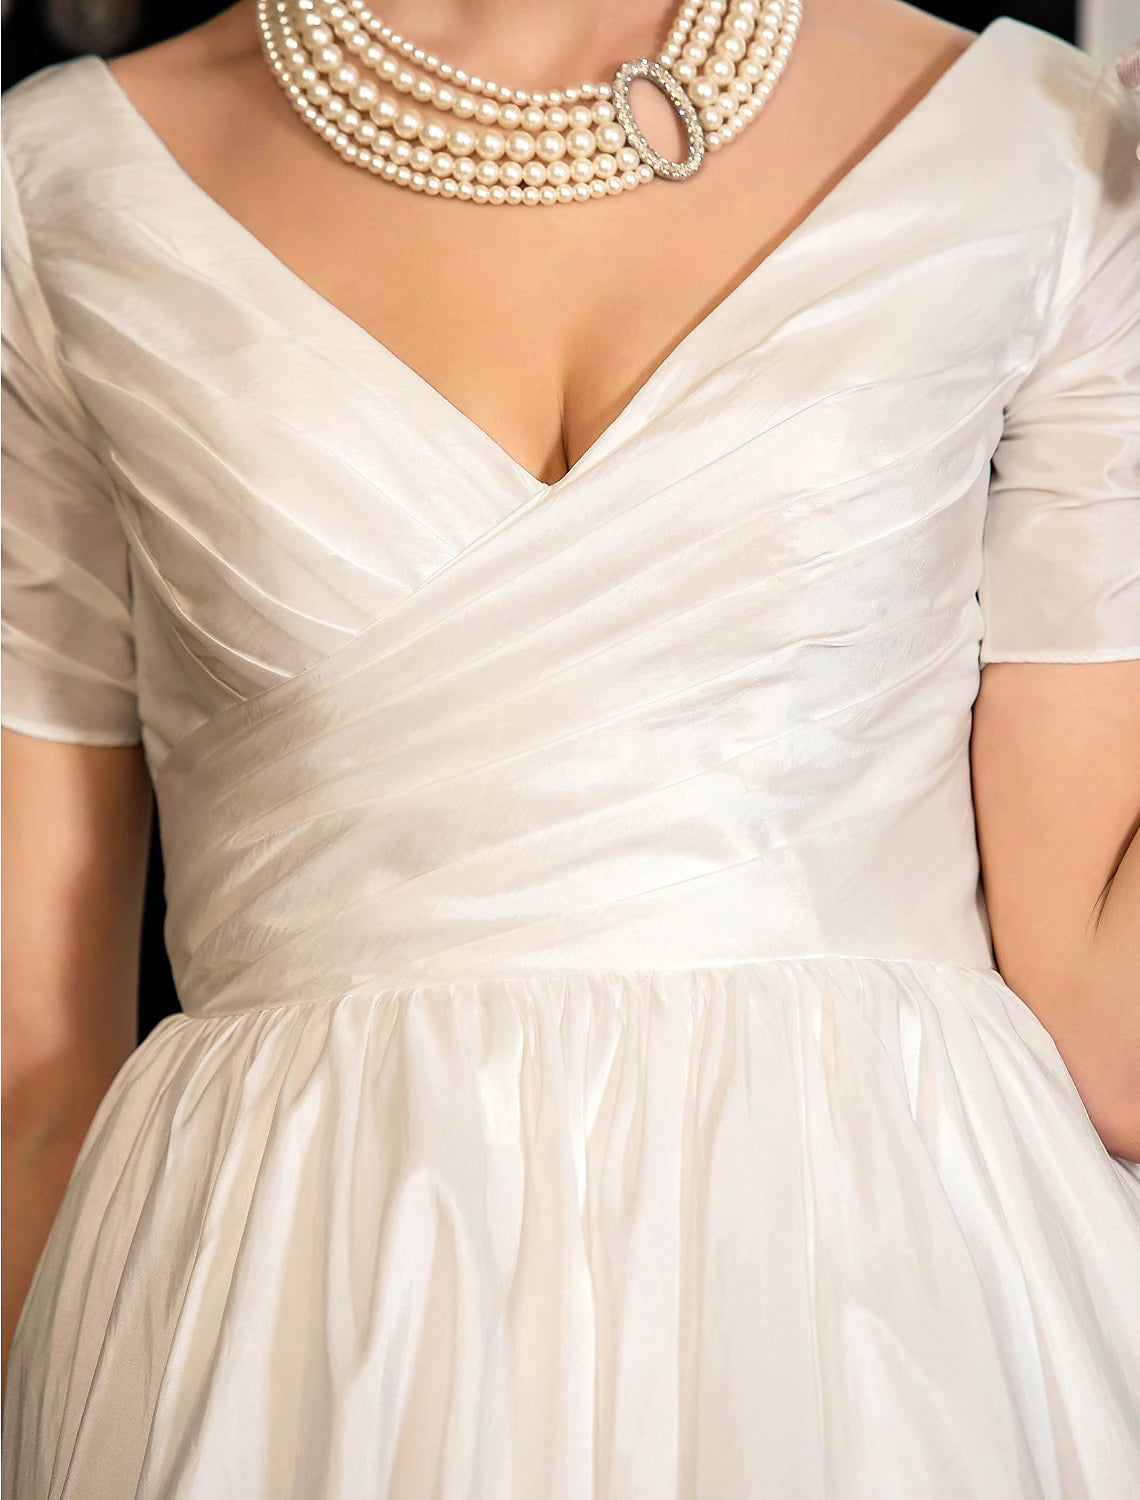 Reception Vintage 1940s / 1950s Little White Dresses Wedding Dresses A-Line V Neck Short Sleeve Tea Length Satin Bridal Gowns With Lace Criss Cross